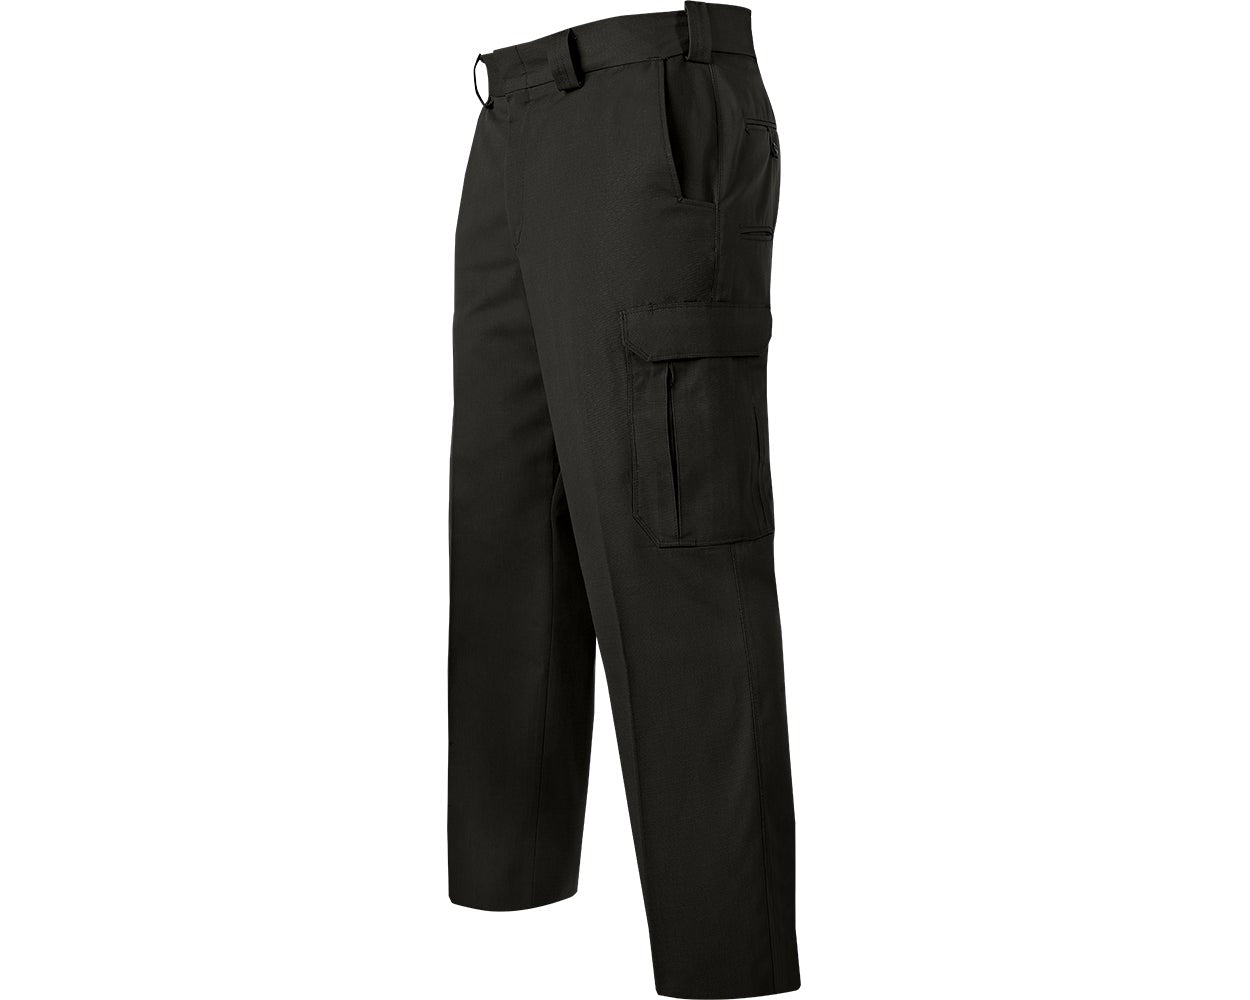 Flying Cross FX STAT Women's Class B Uniform Pants FX77300W - Black, 2